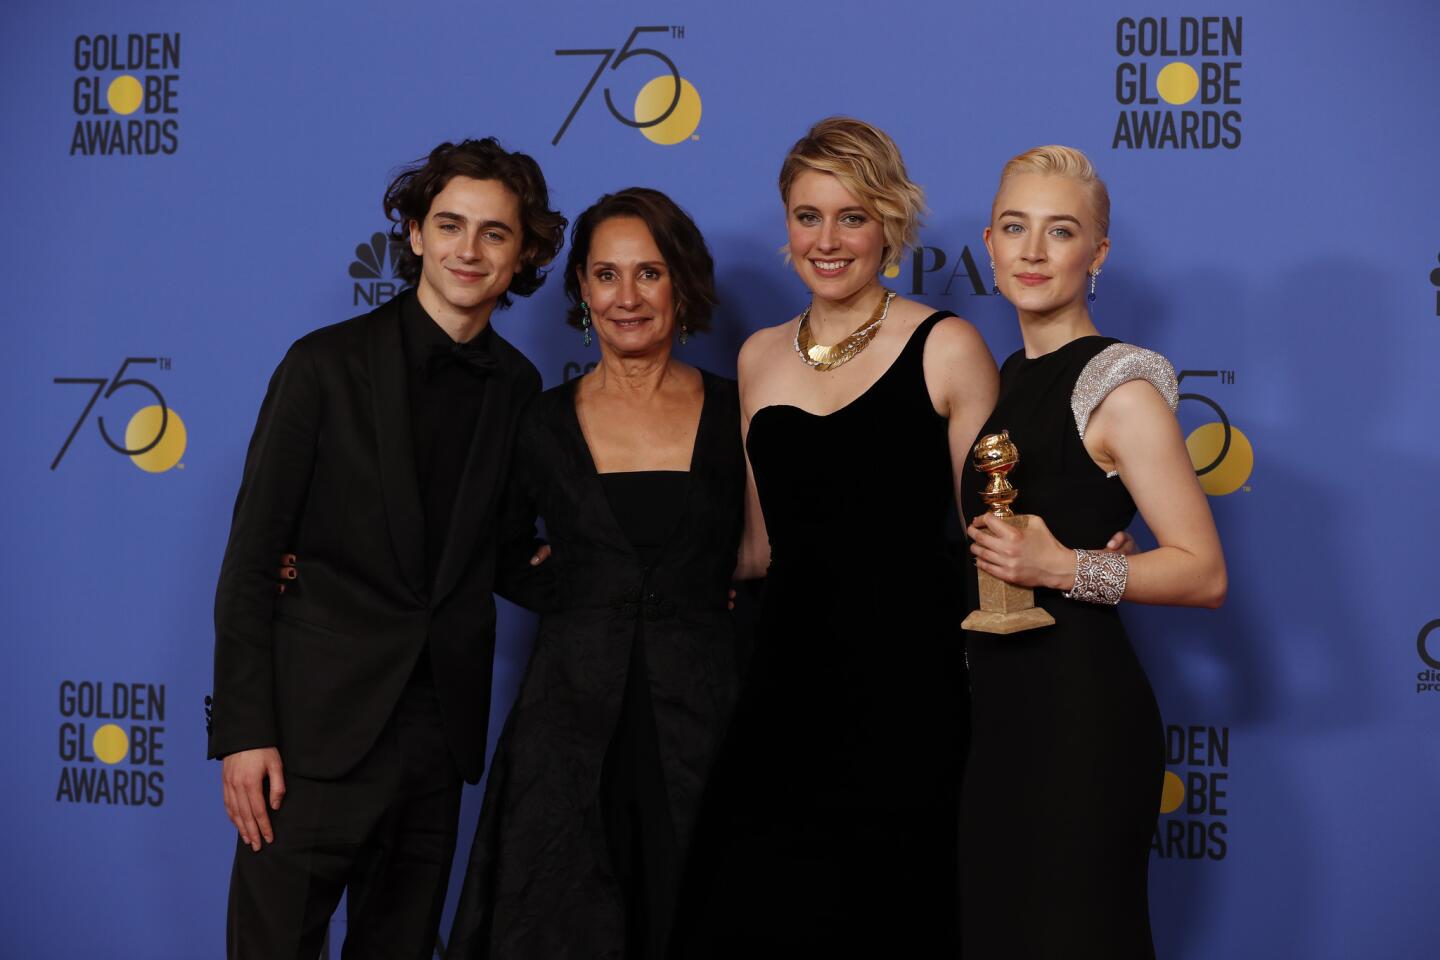 Golden Globe winners' room